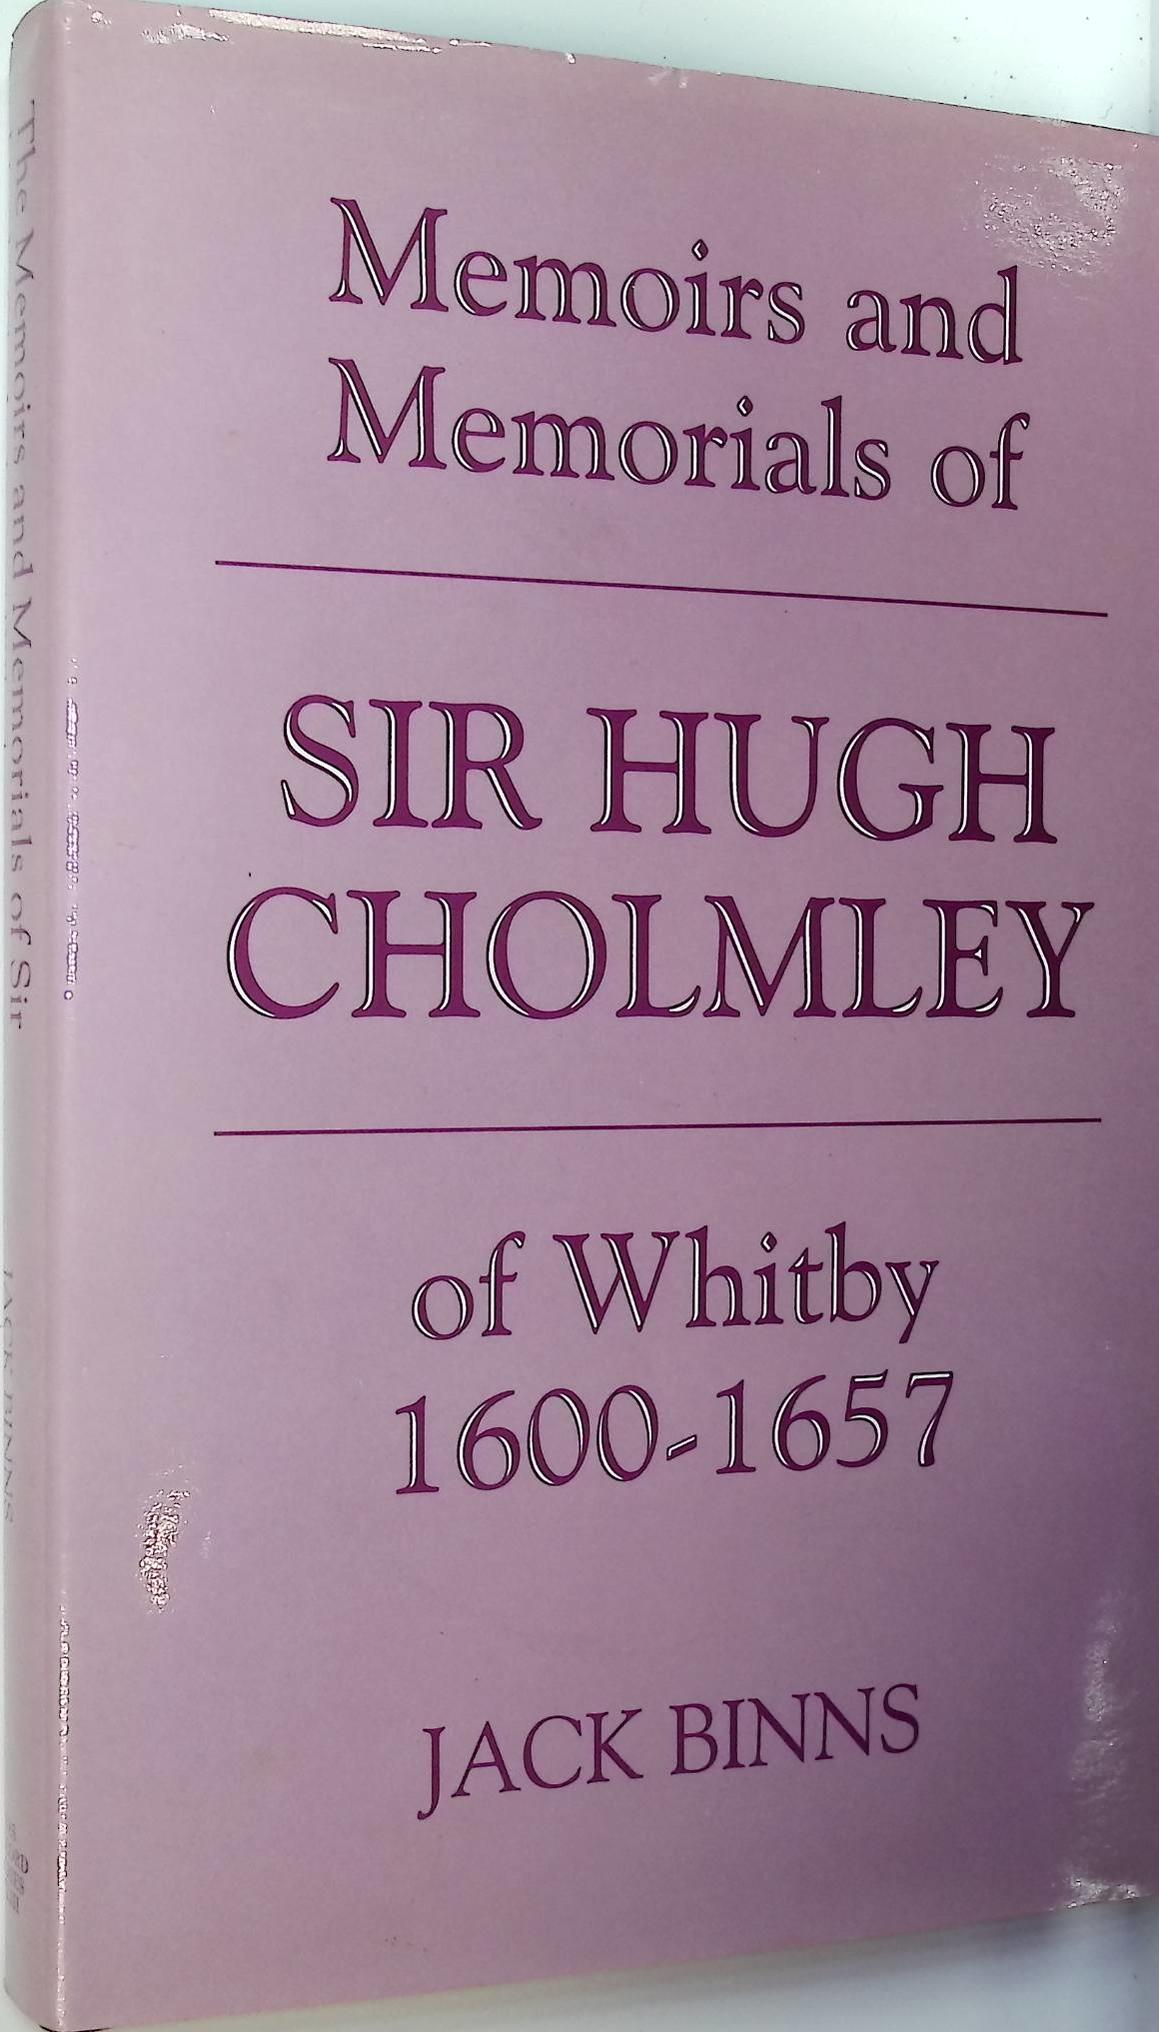 Memoirs and Memorials of Sir Hugh Cholmley of Whitby 1600 - 1657